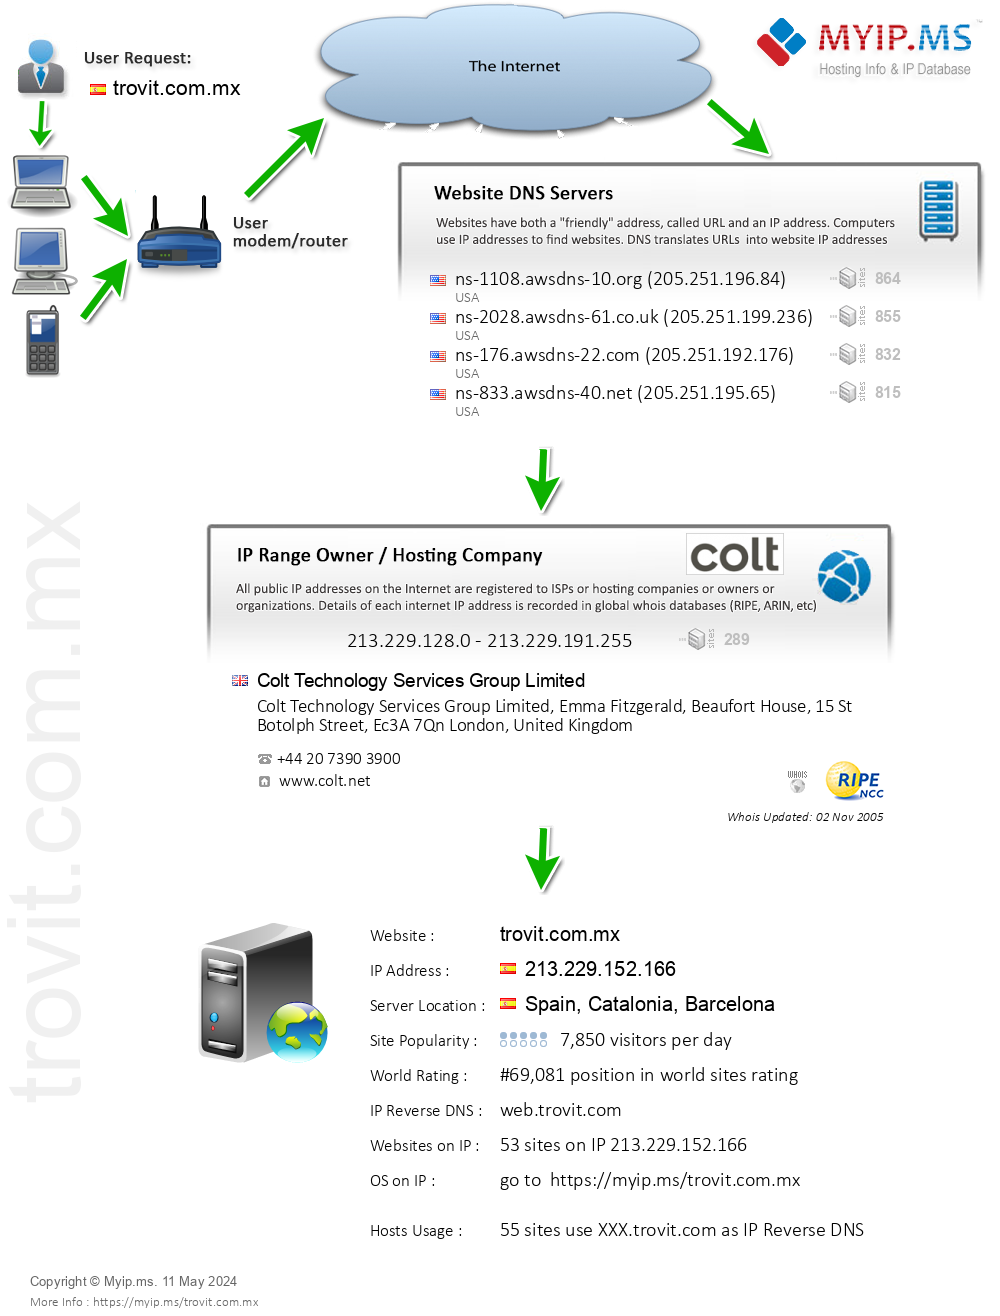 Trovit.com.mx - Website Hosting Visual IP Diagram